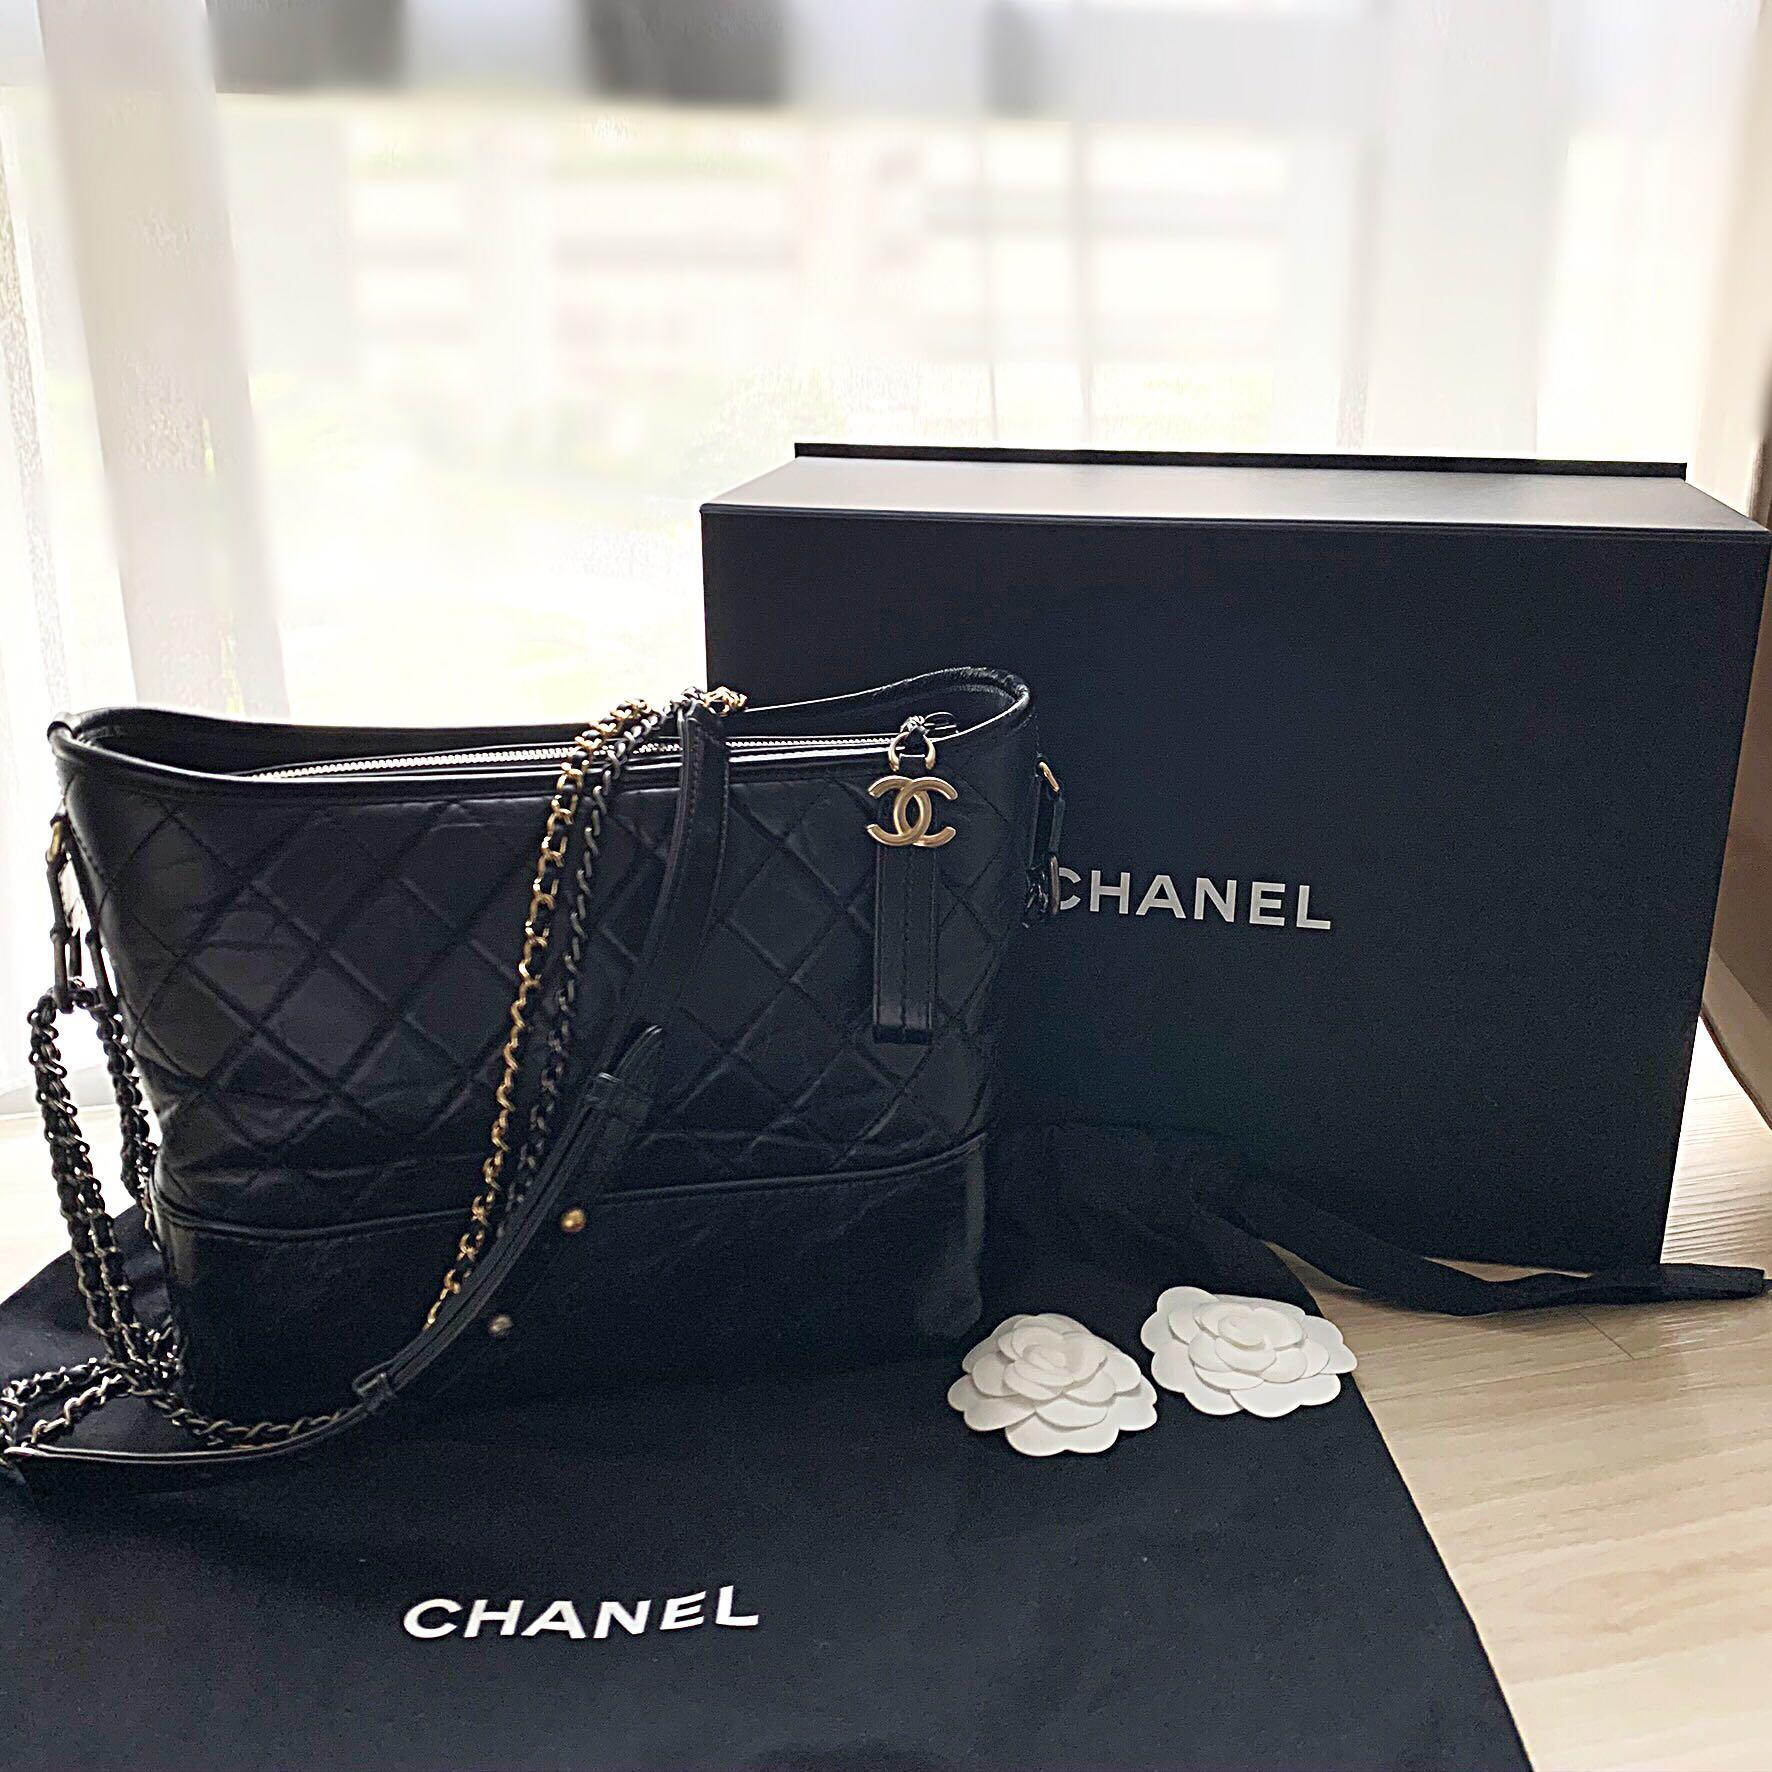 Chanel Gabrielle Hobo Medium Beige/Black Aged Calfskin Leather with 2 tone  hardware